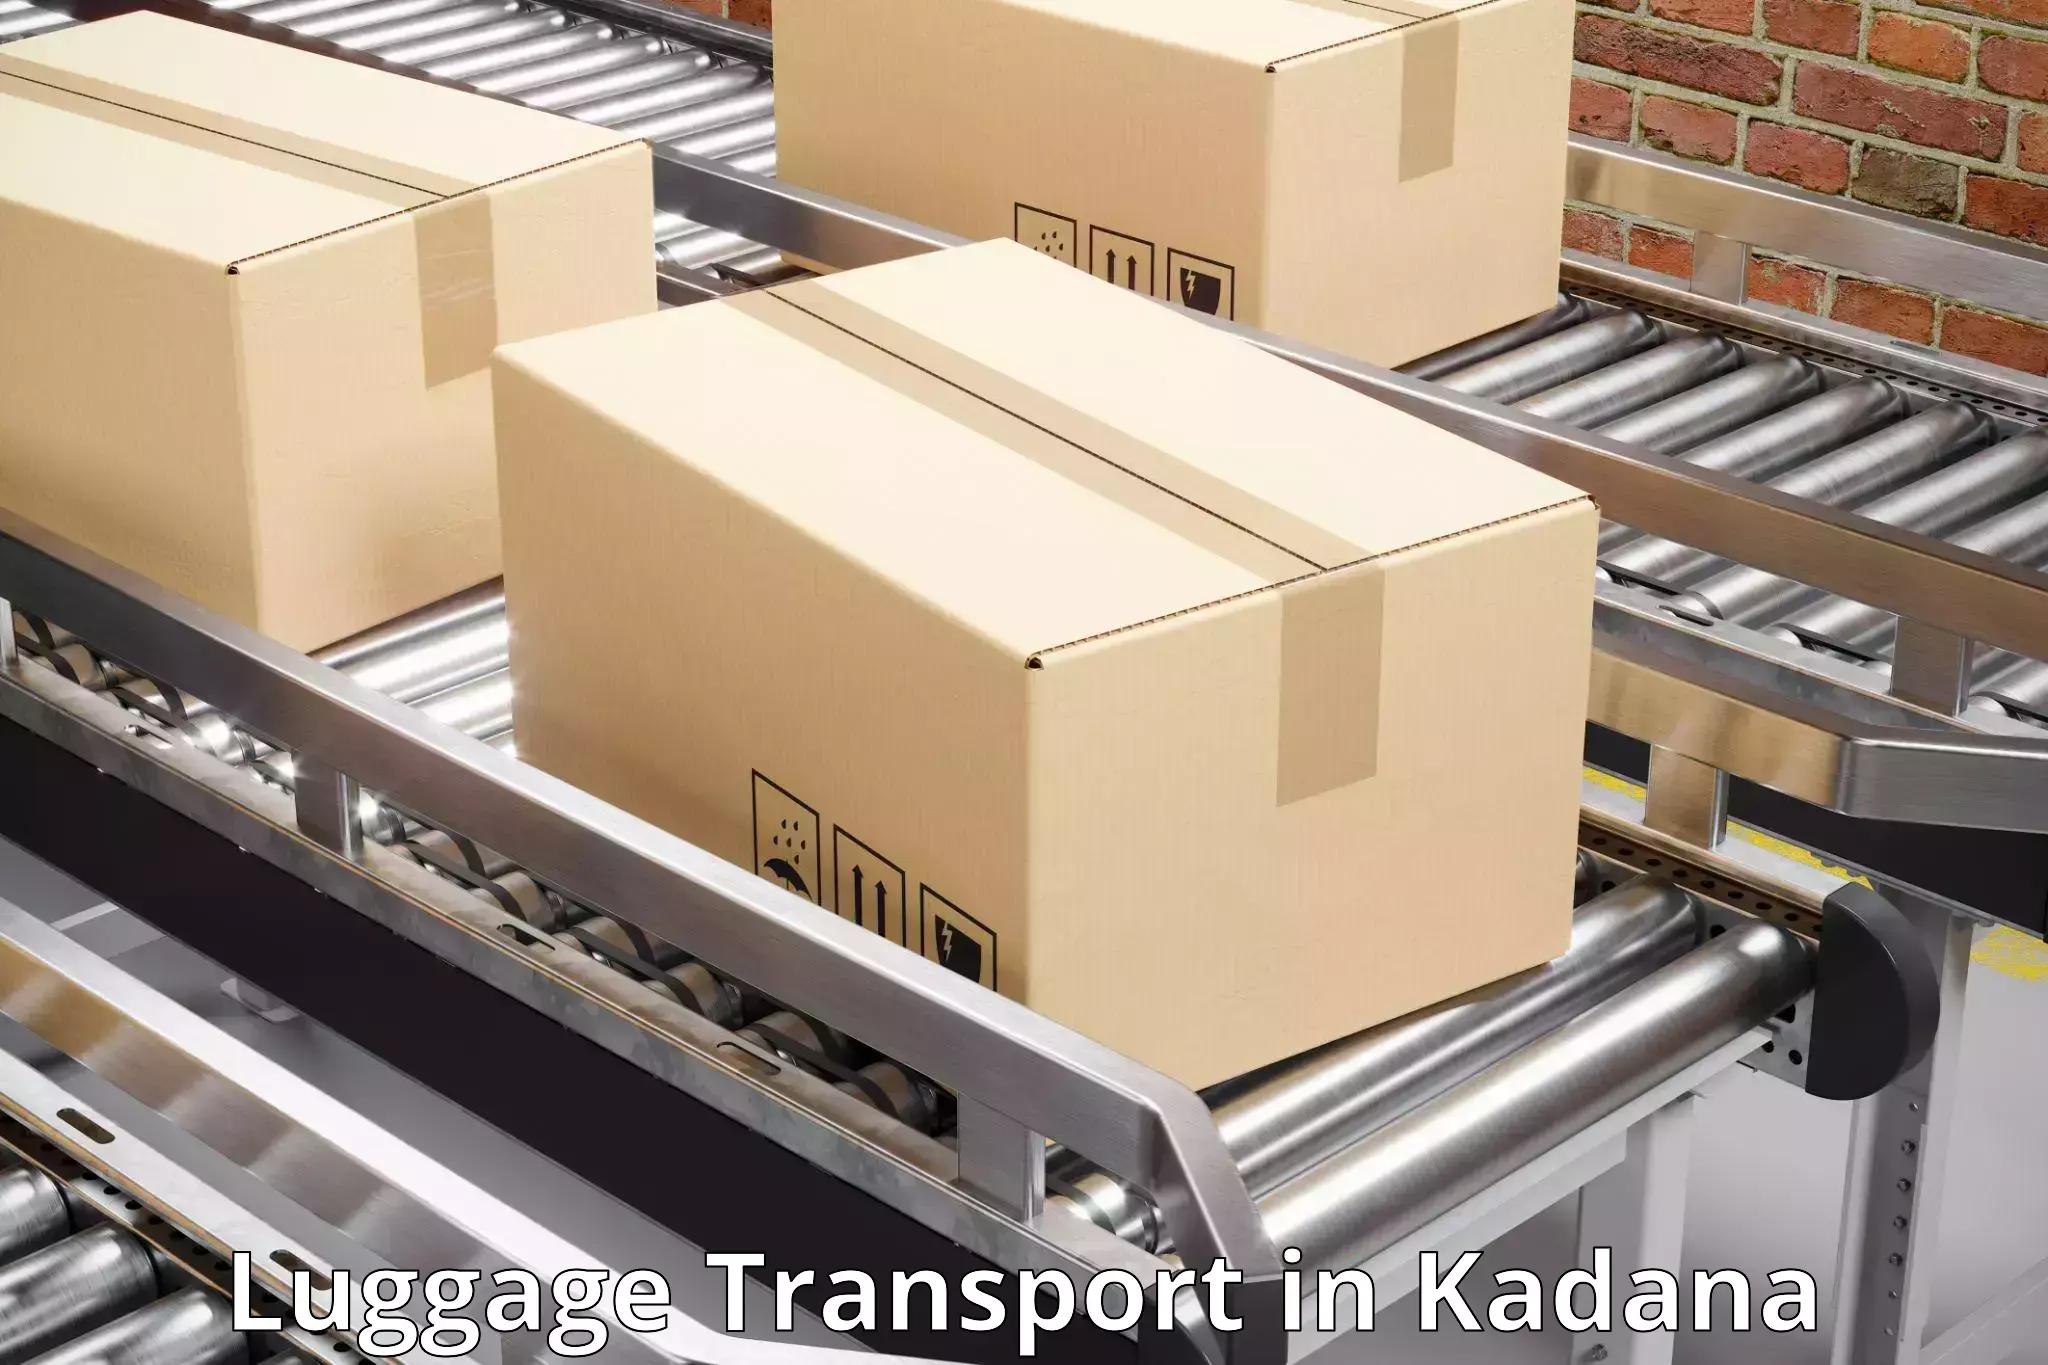 Suburban luggage delivery in Kadana